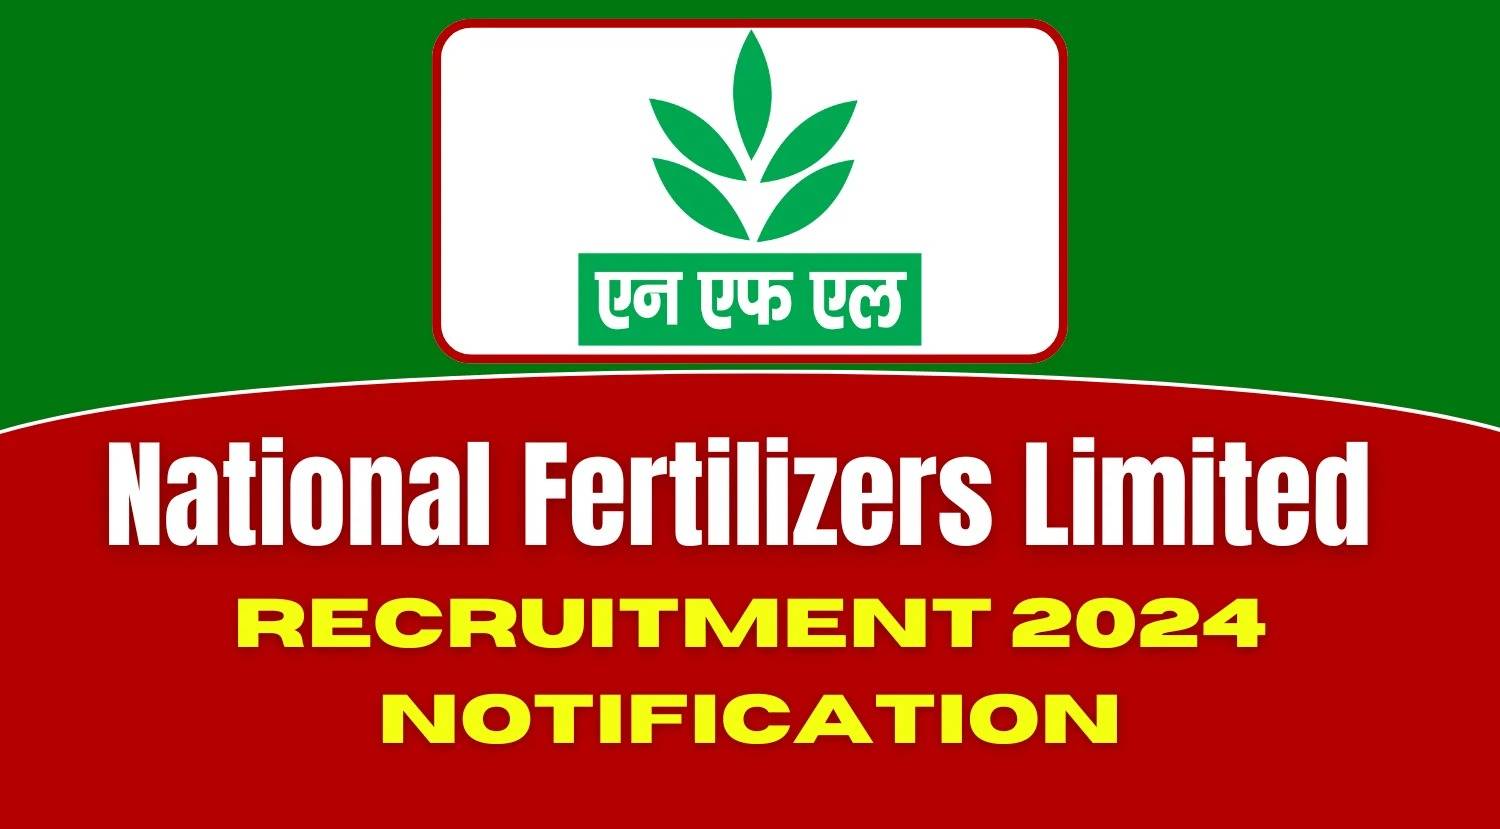 National Fertilizers Limited Announces Recruitment 2024: Online Application Process Begins